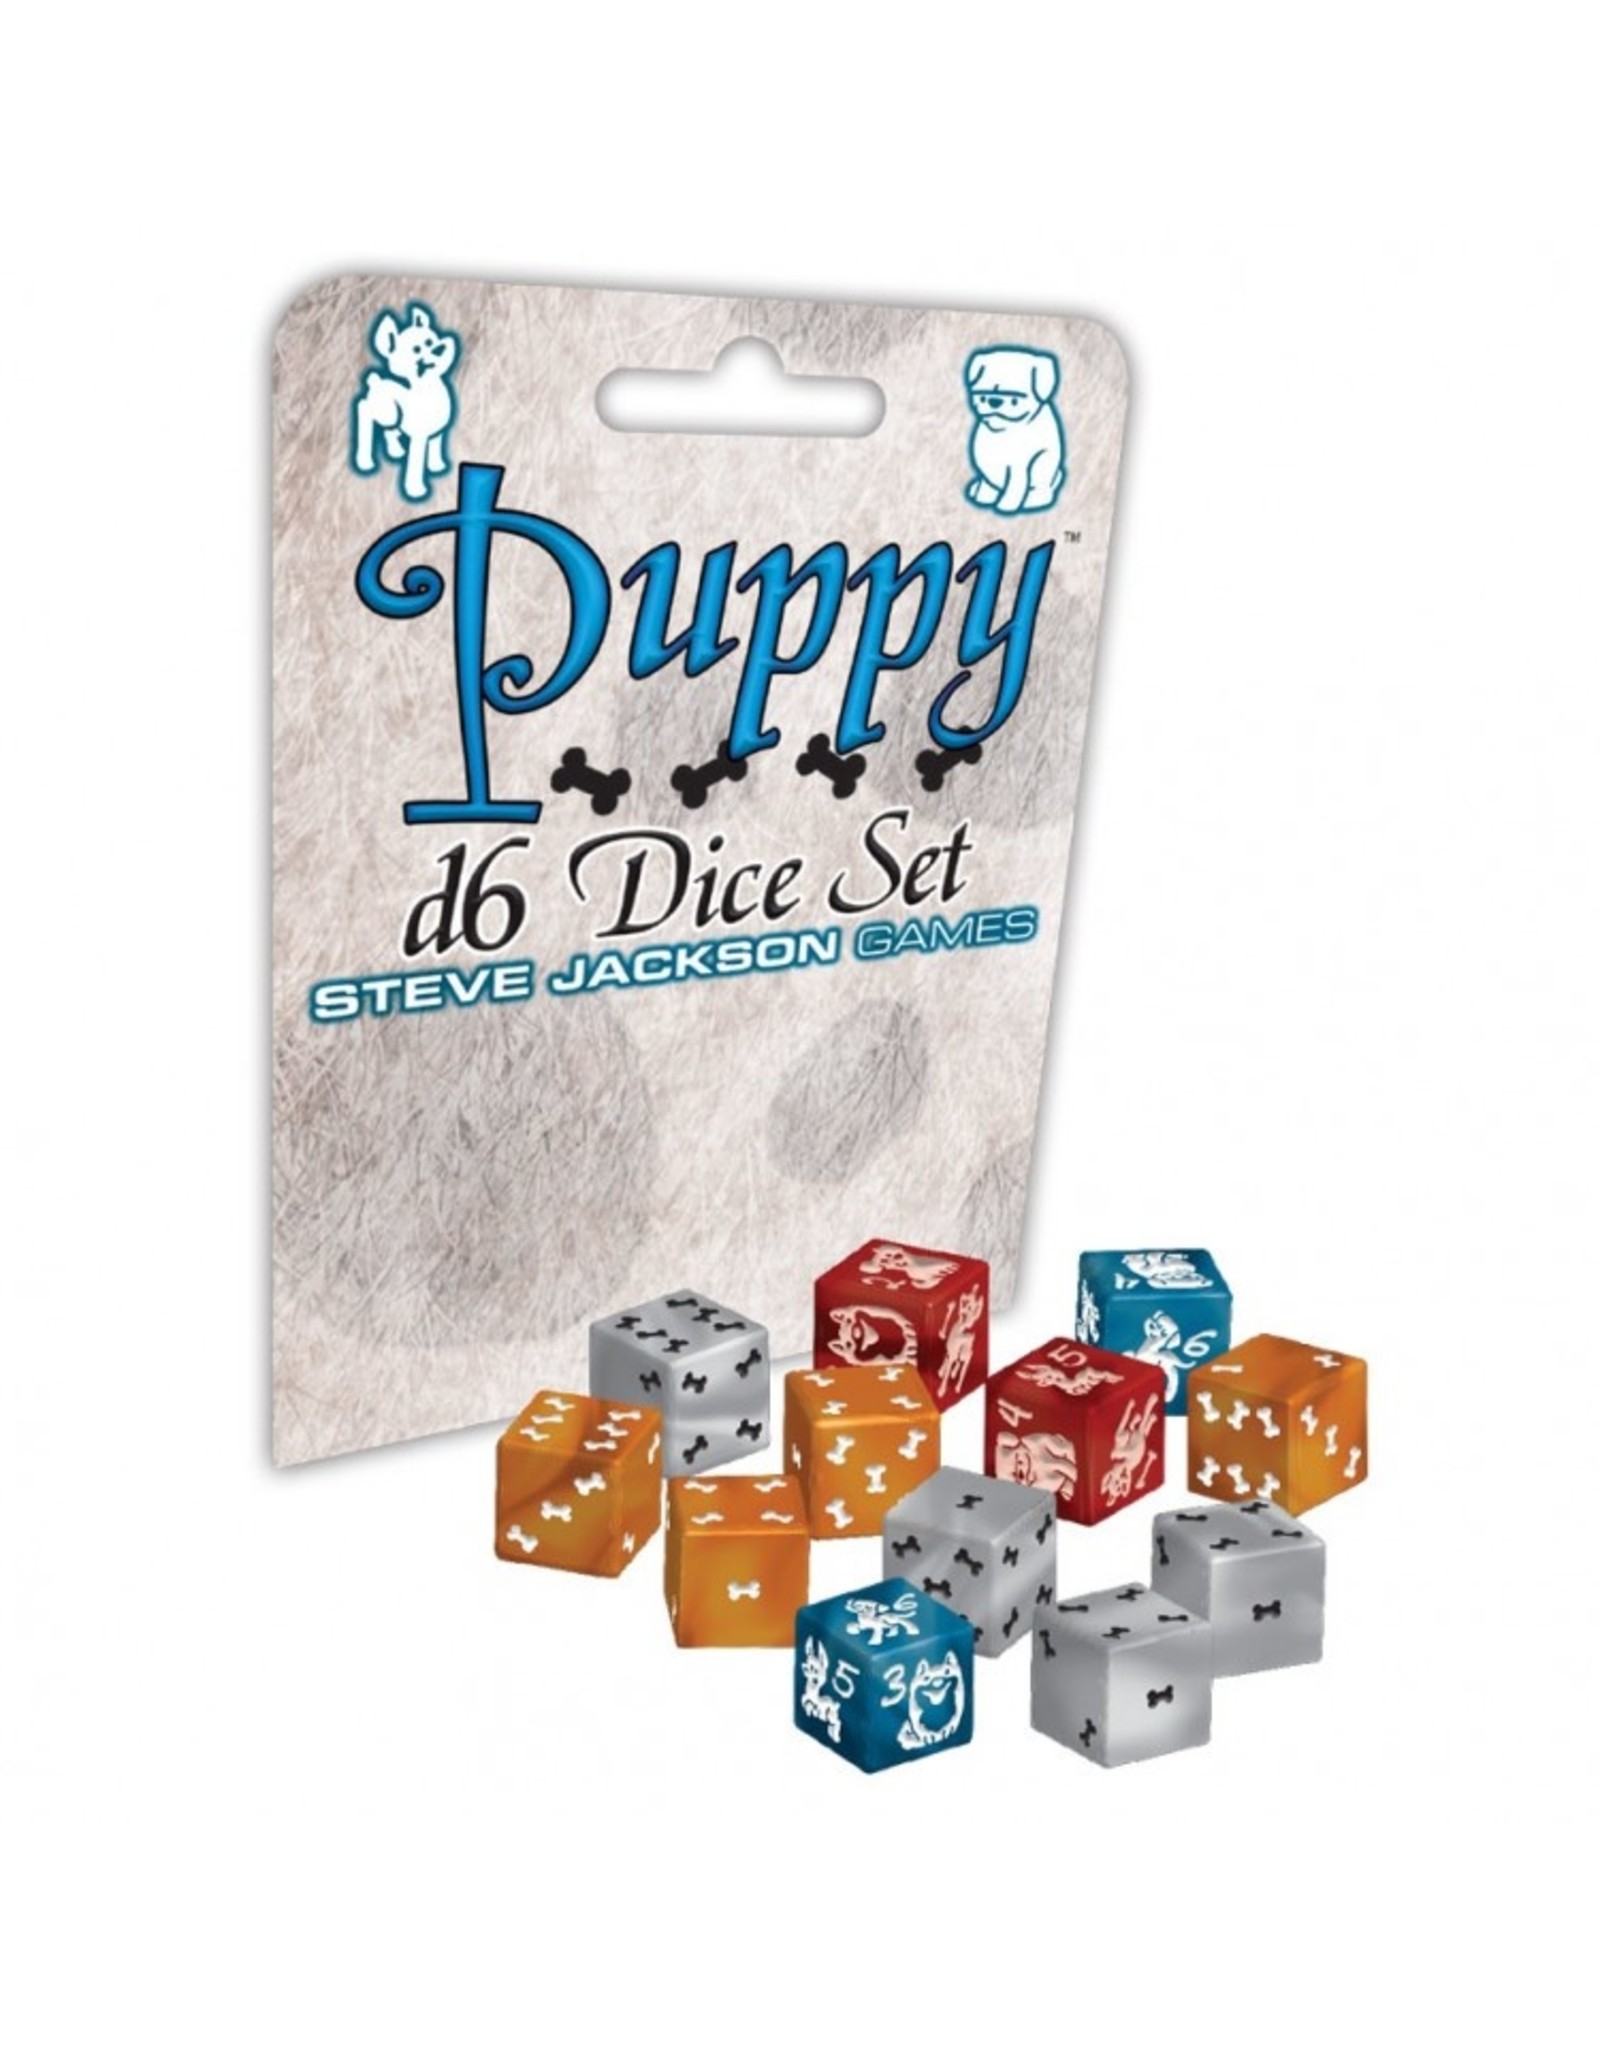 Steve Jackson Games Dice: Puppy d6 Dice Set